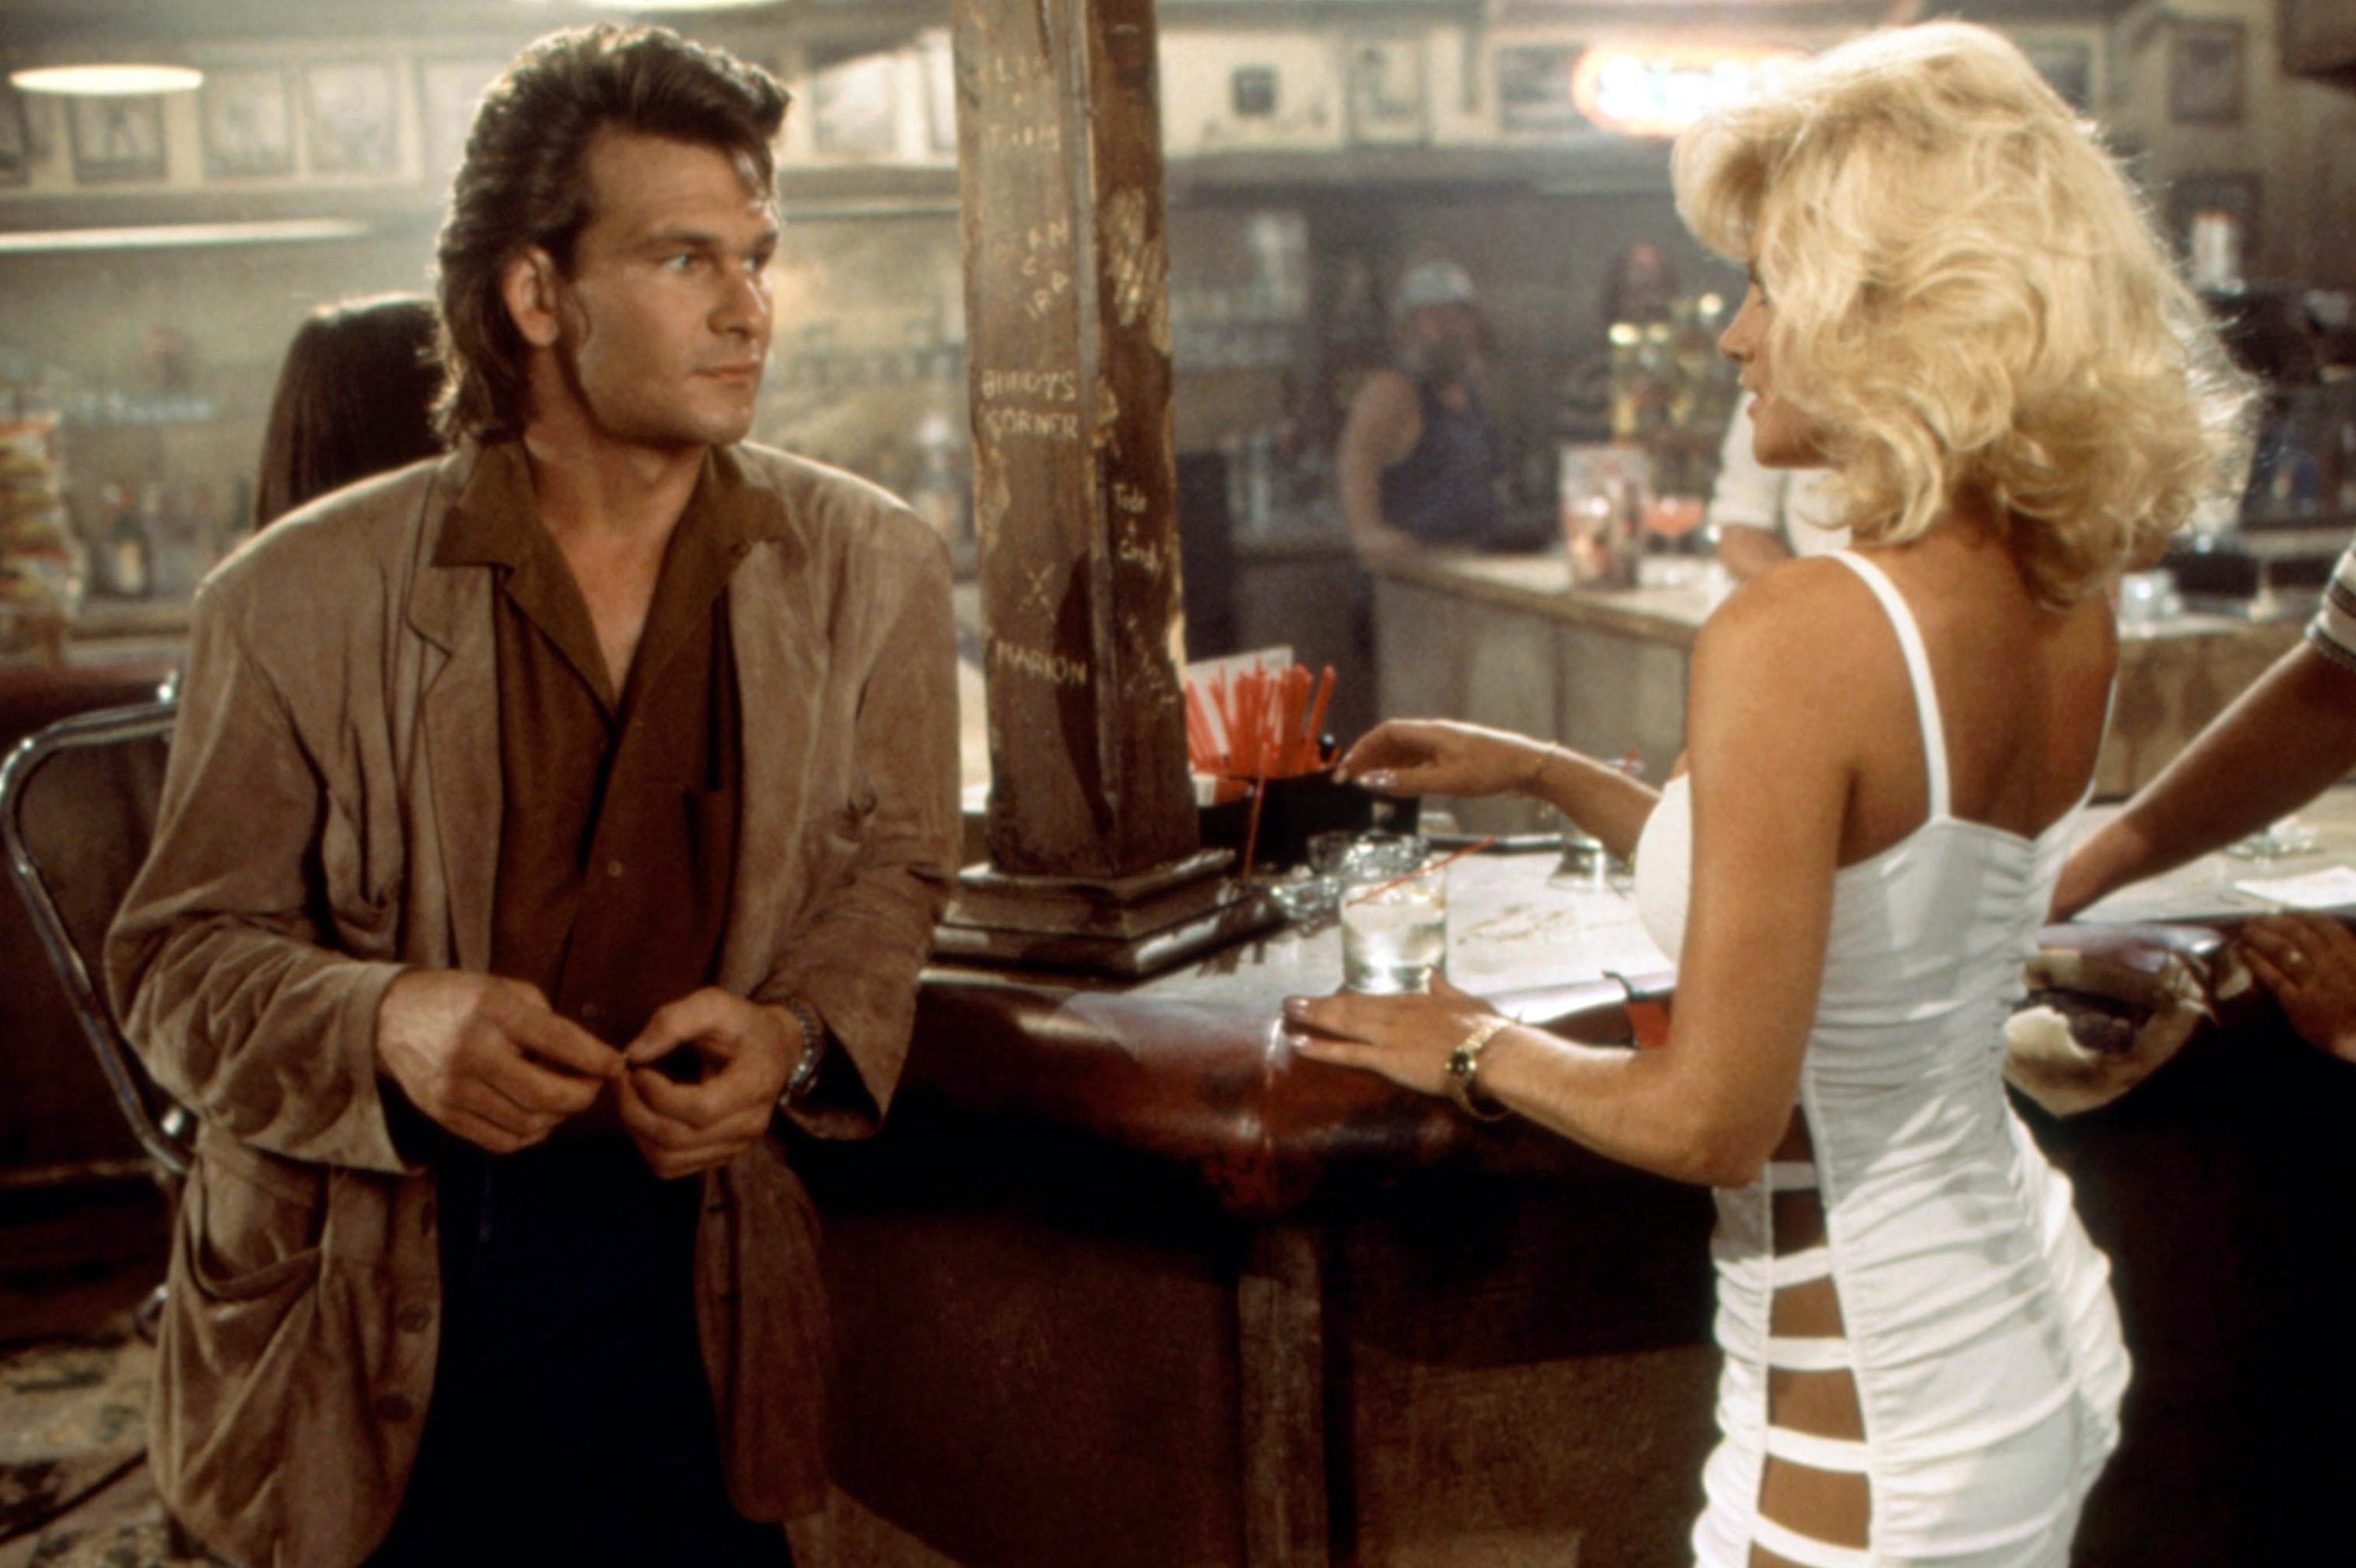 Patrick Swayze leans on a western-themed bar near a blonde woman